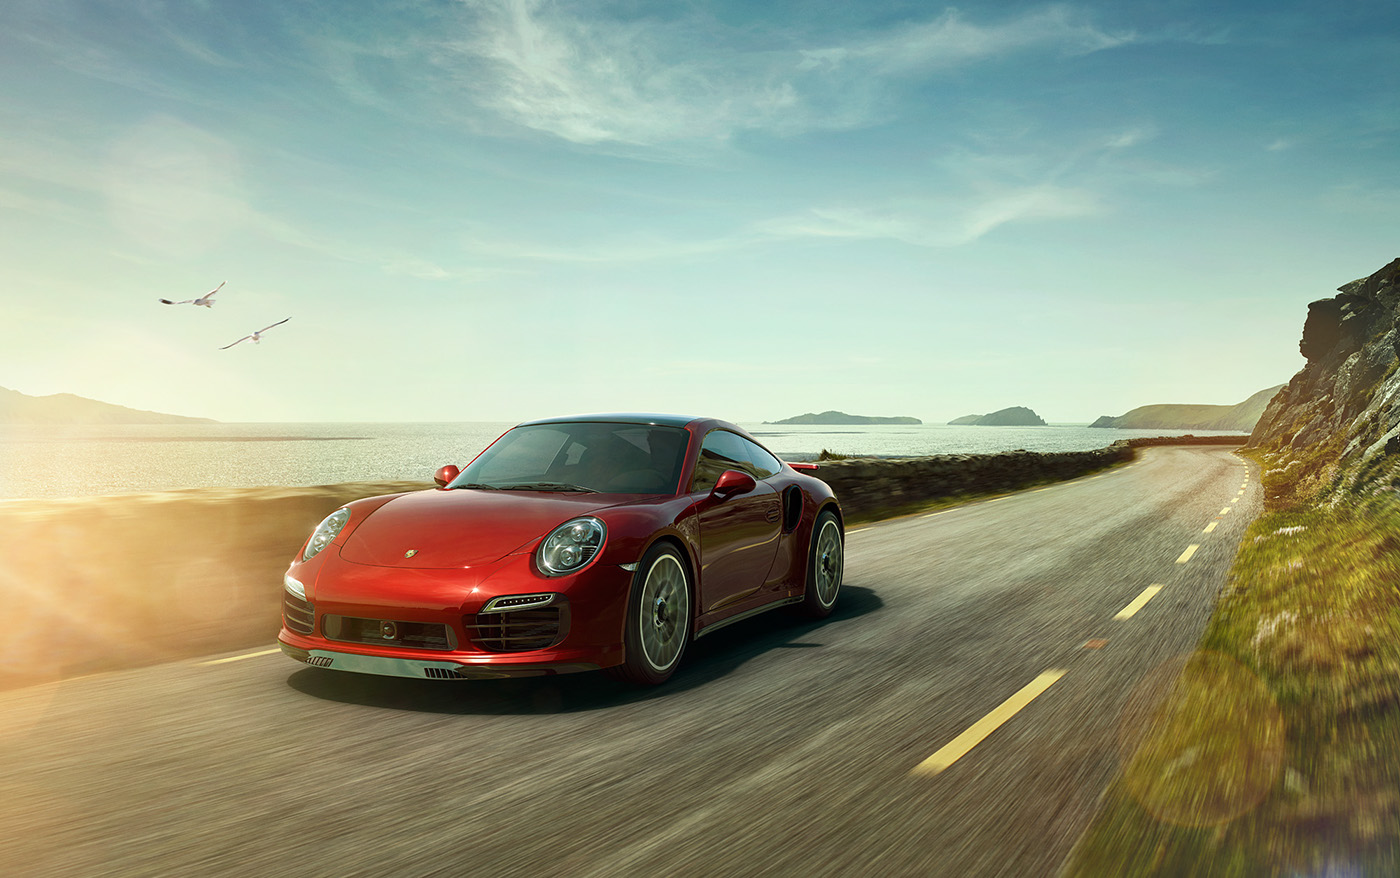 Adobe Portfolio david hogan jmbritto Porsche sunset color grade automotive   speed car red freedom turbo